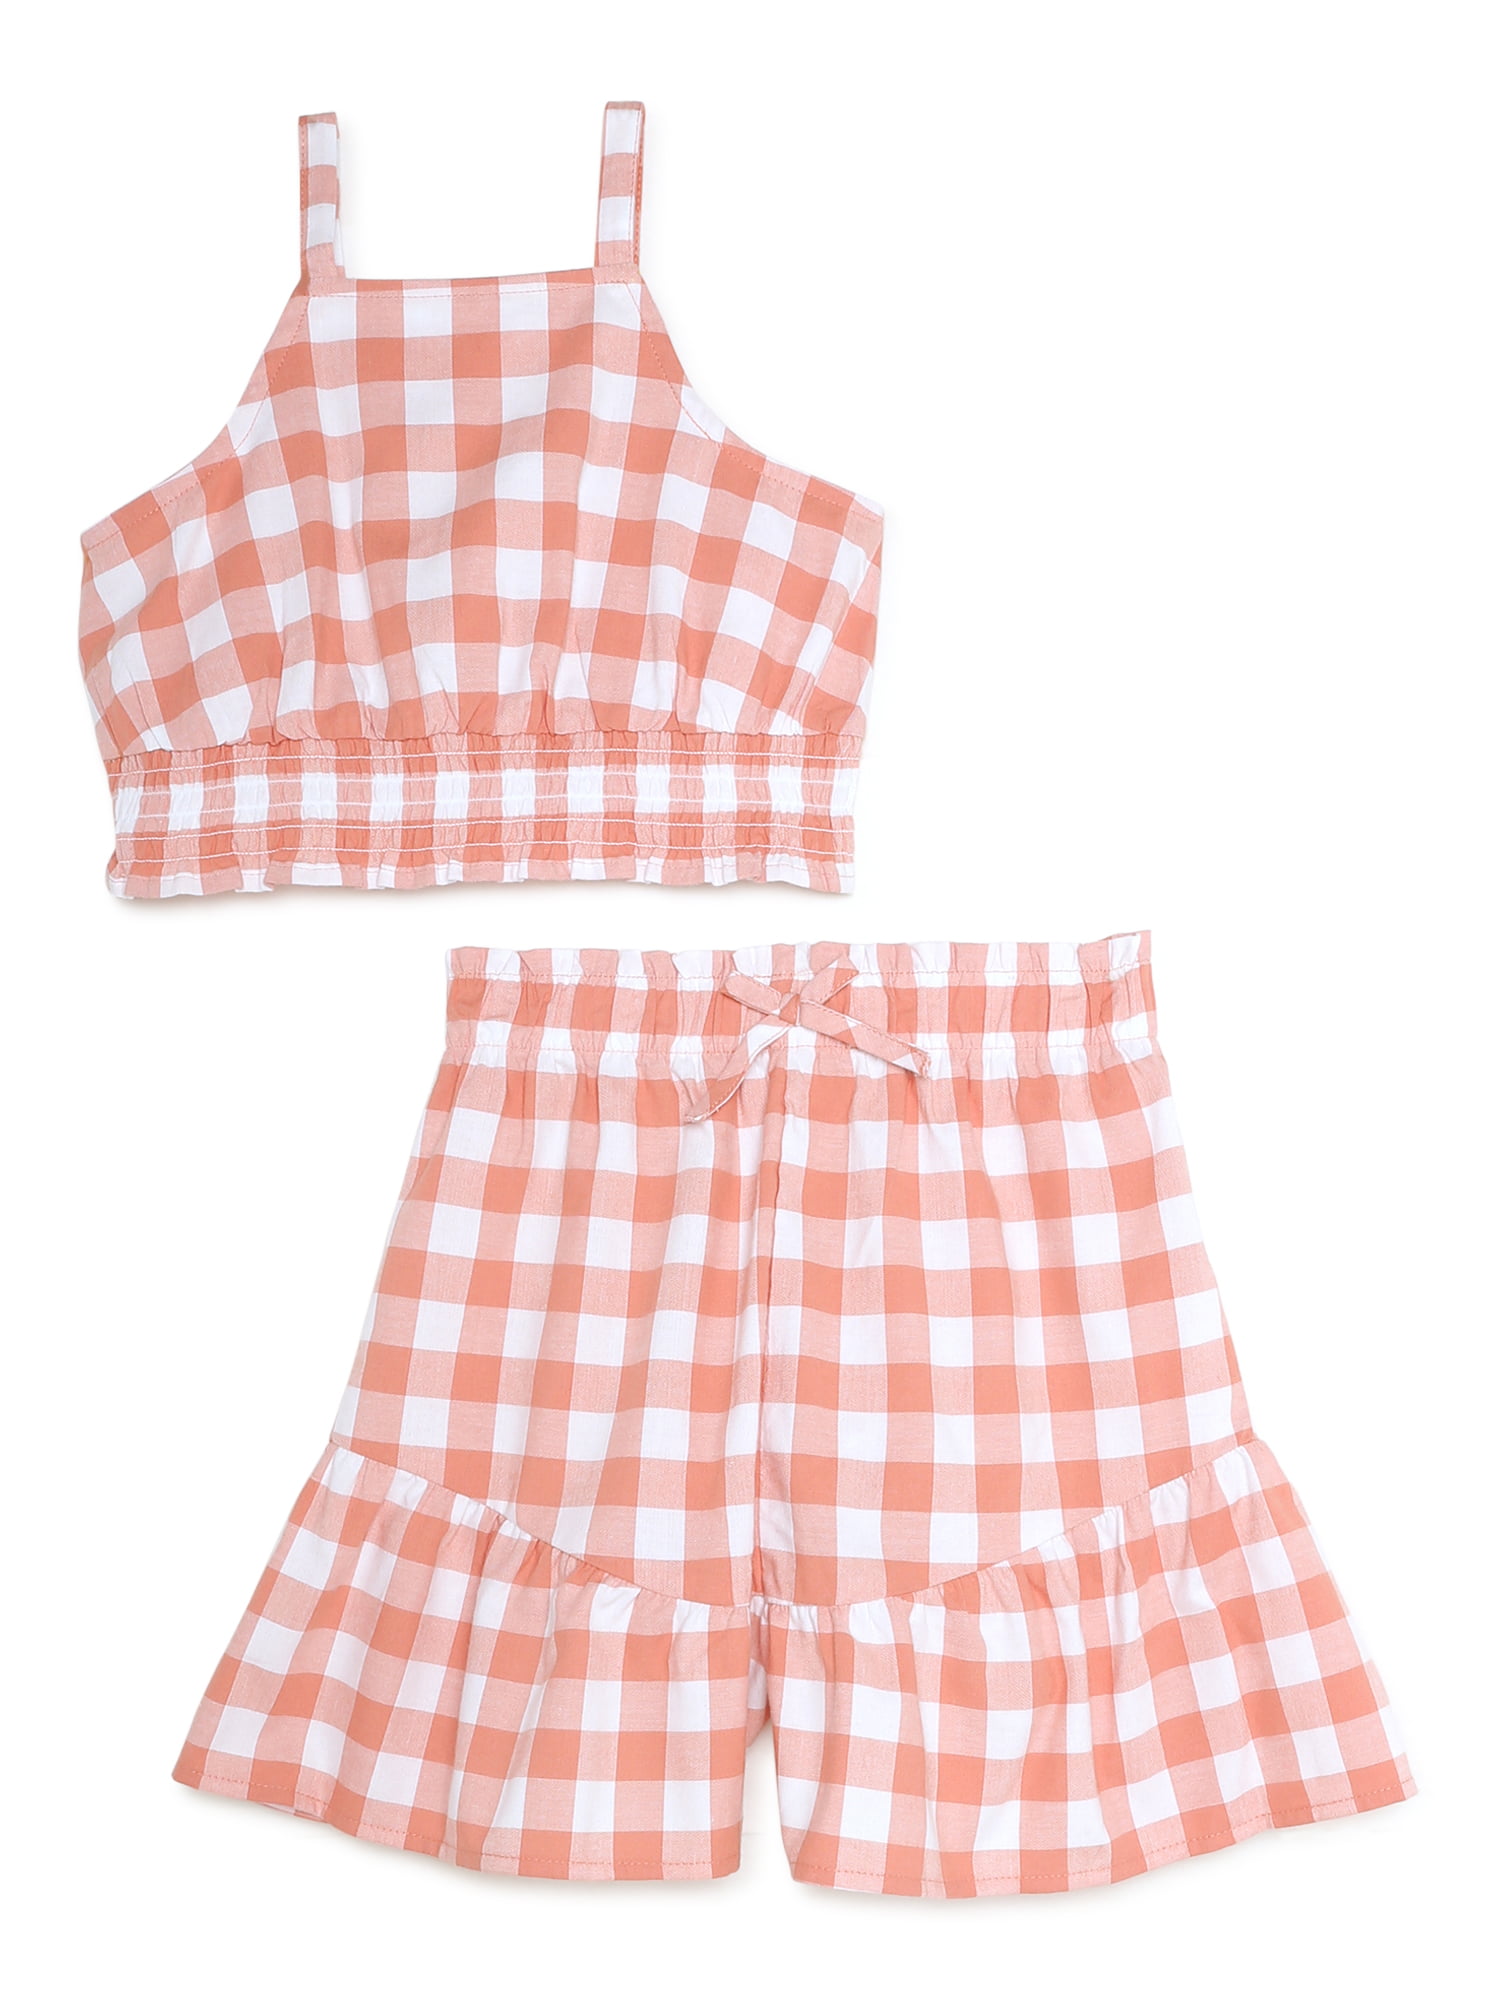 NWT Gymboree Mix N Match Pink Girls Flower Knit Pull On Sun Shorts Size M 7 8 